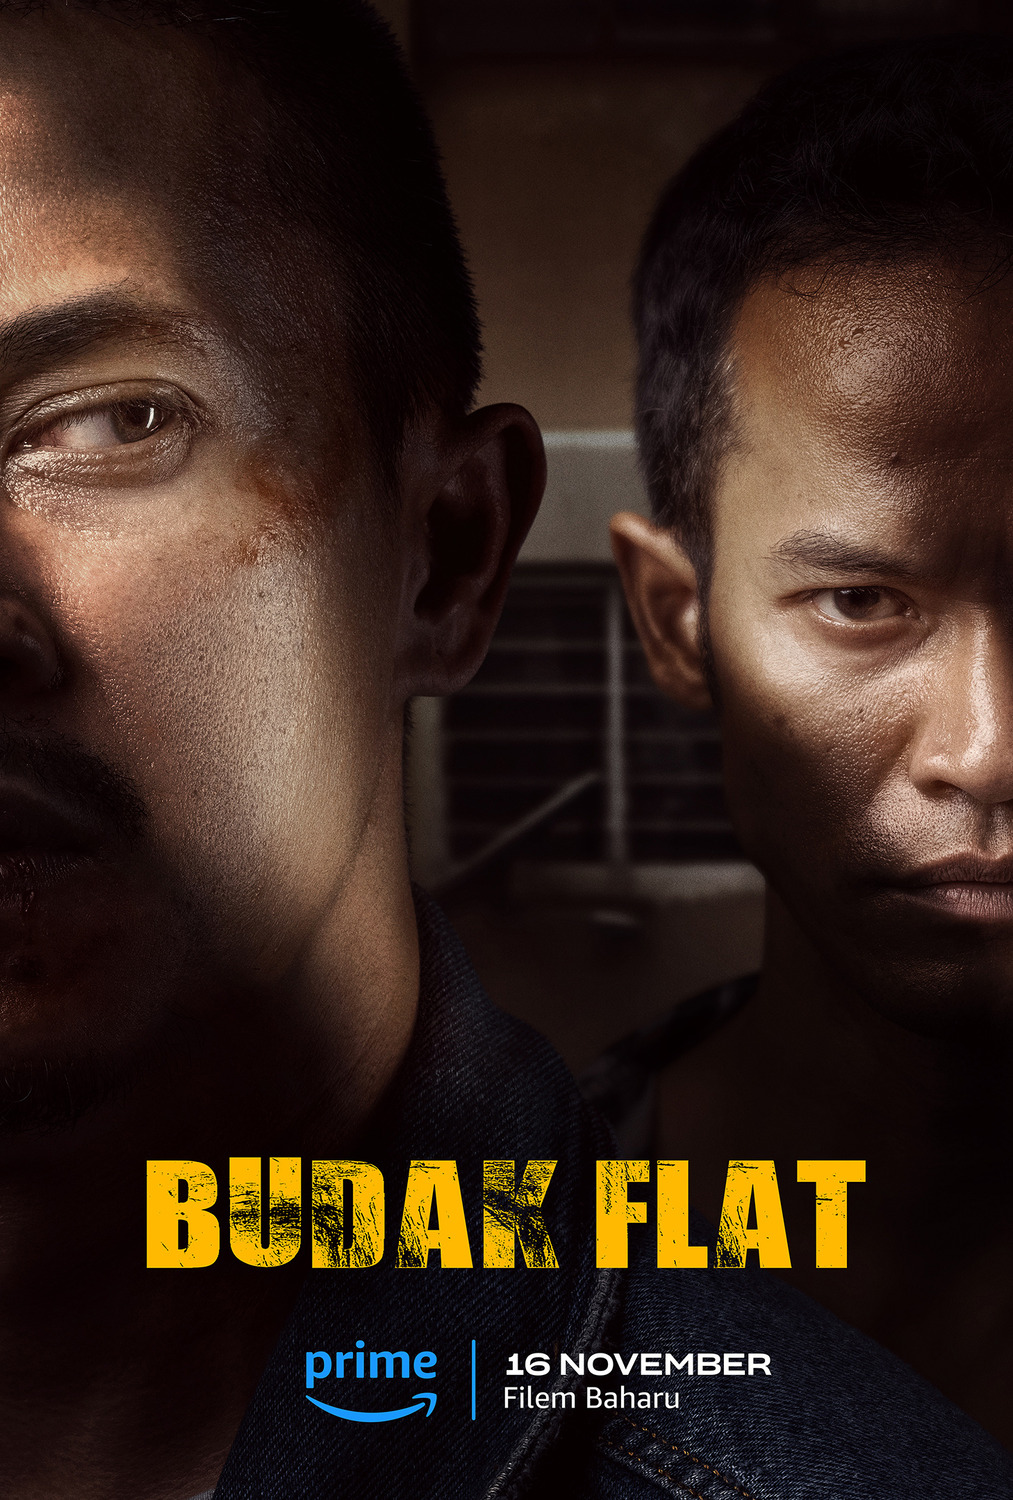 Extra Large Movie Poster Image for Budak Flat (#2 of 2)